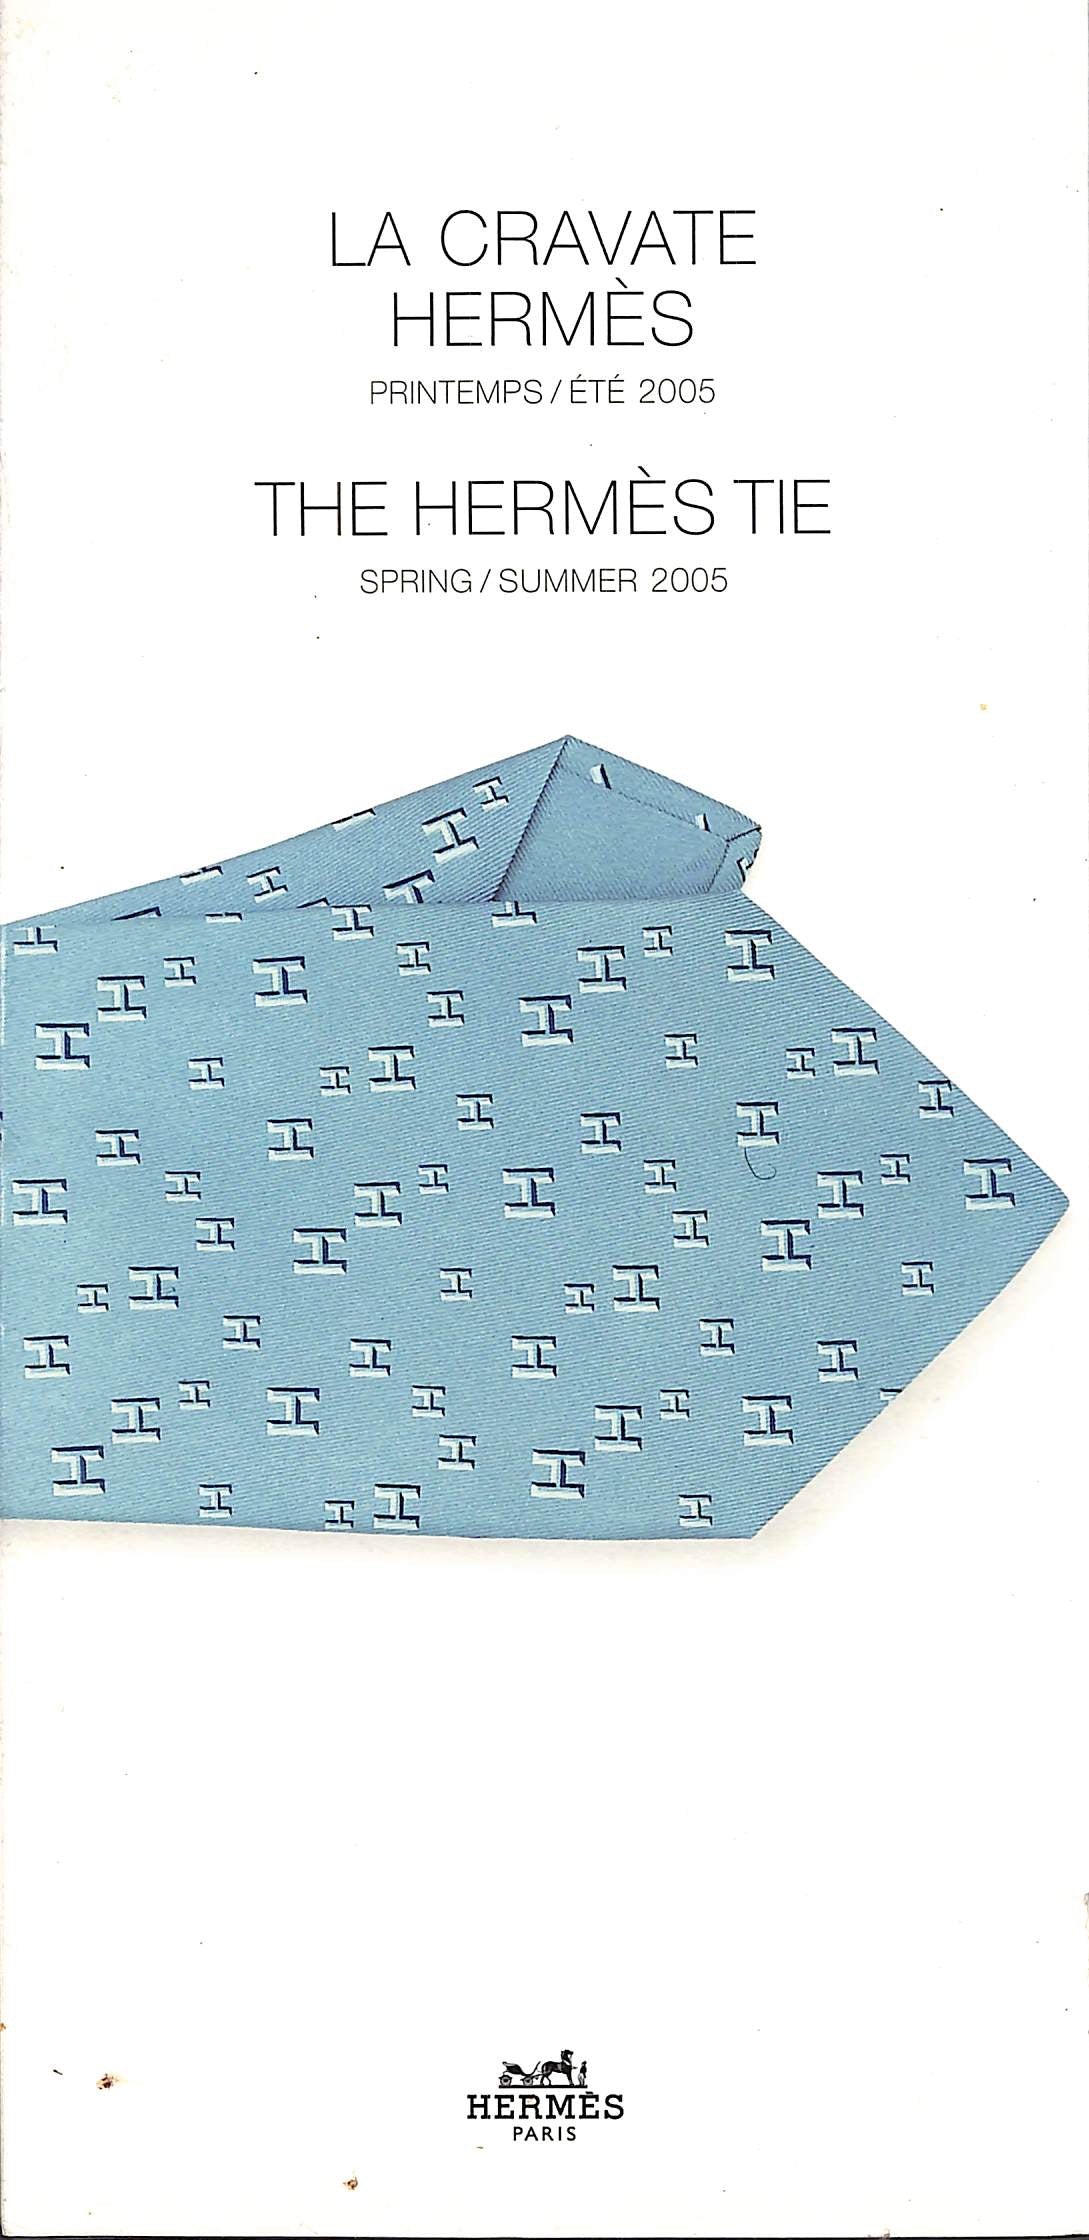 "The Hermes Tie Spring/Summer 2005"